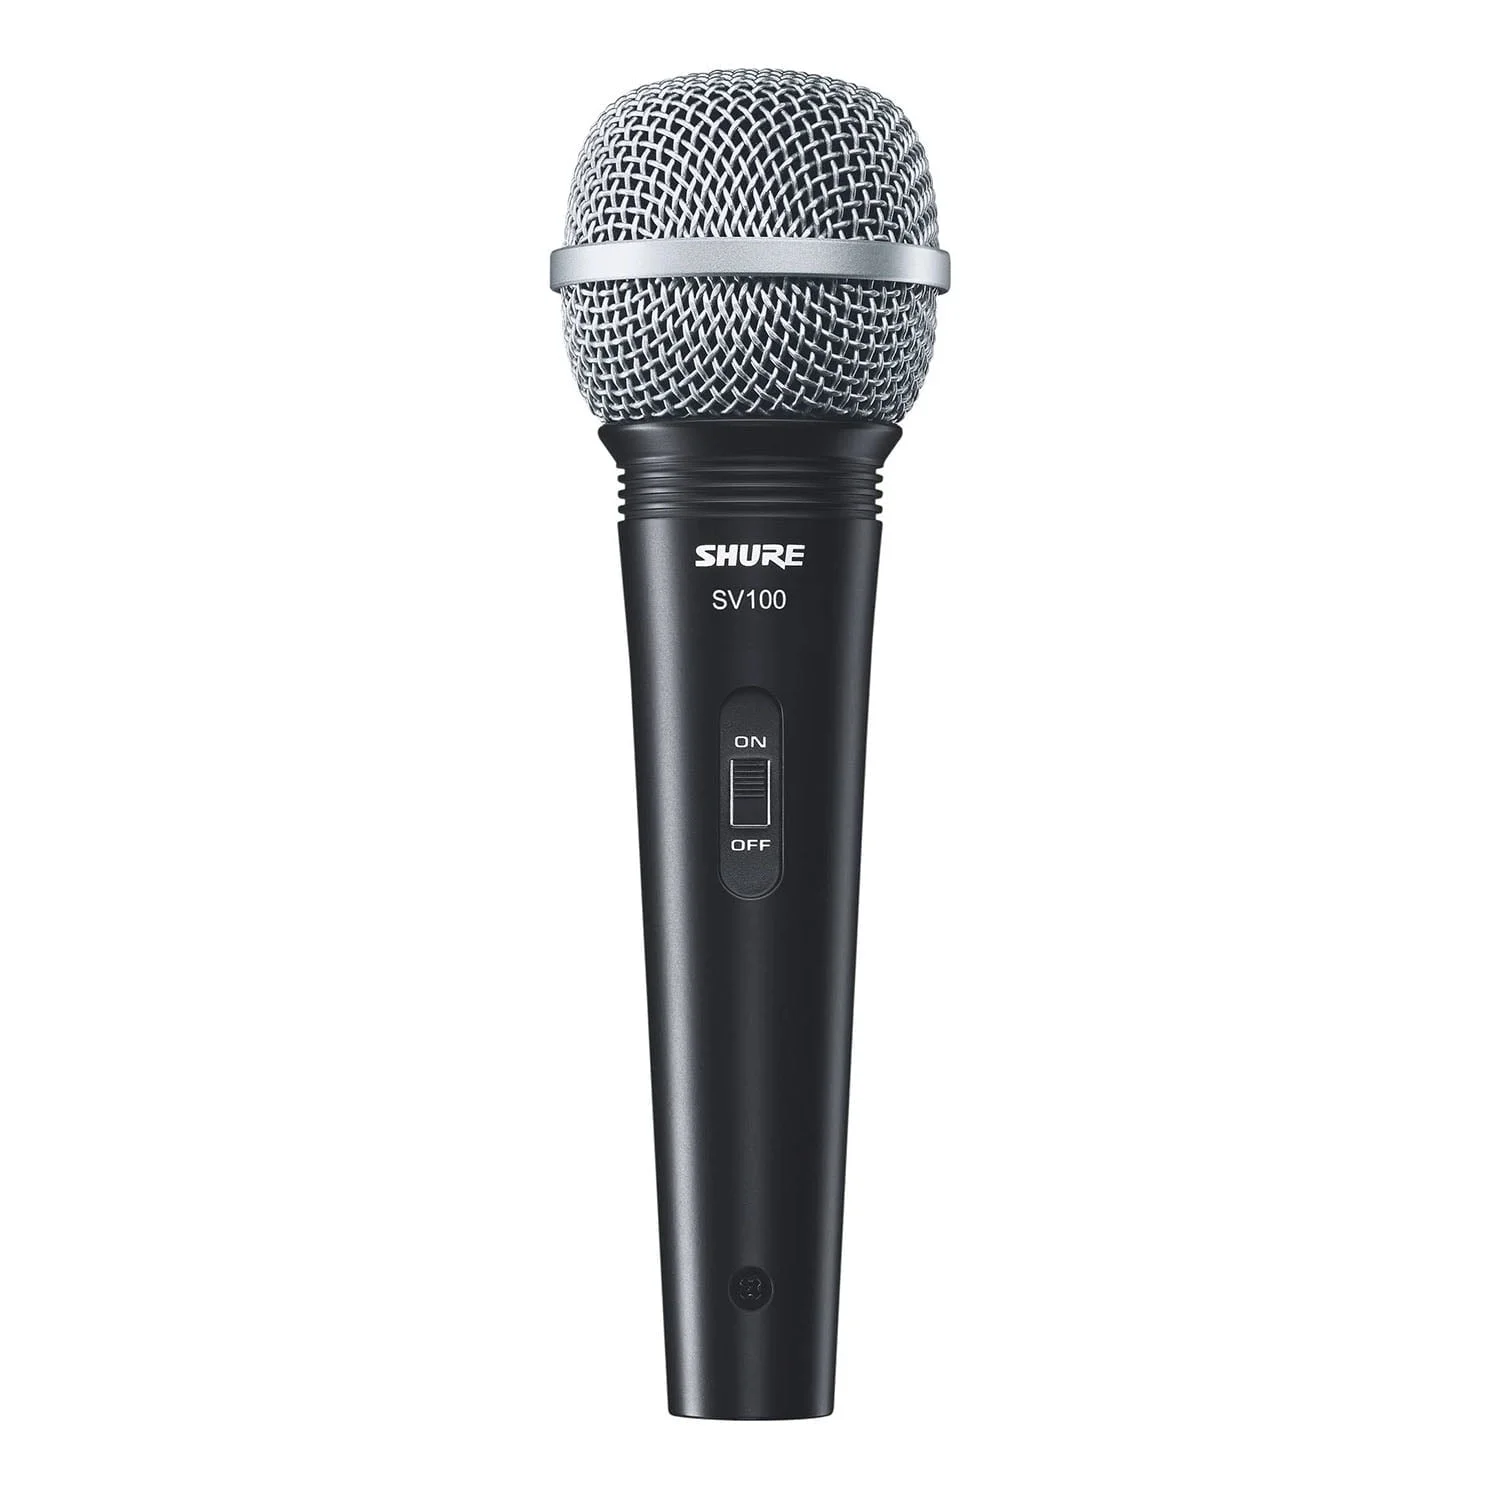 Shure SV100 Microphone